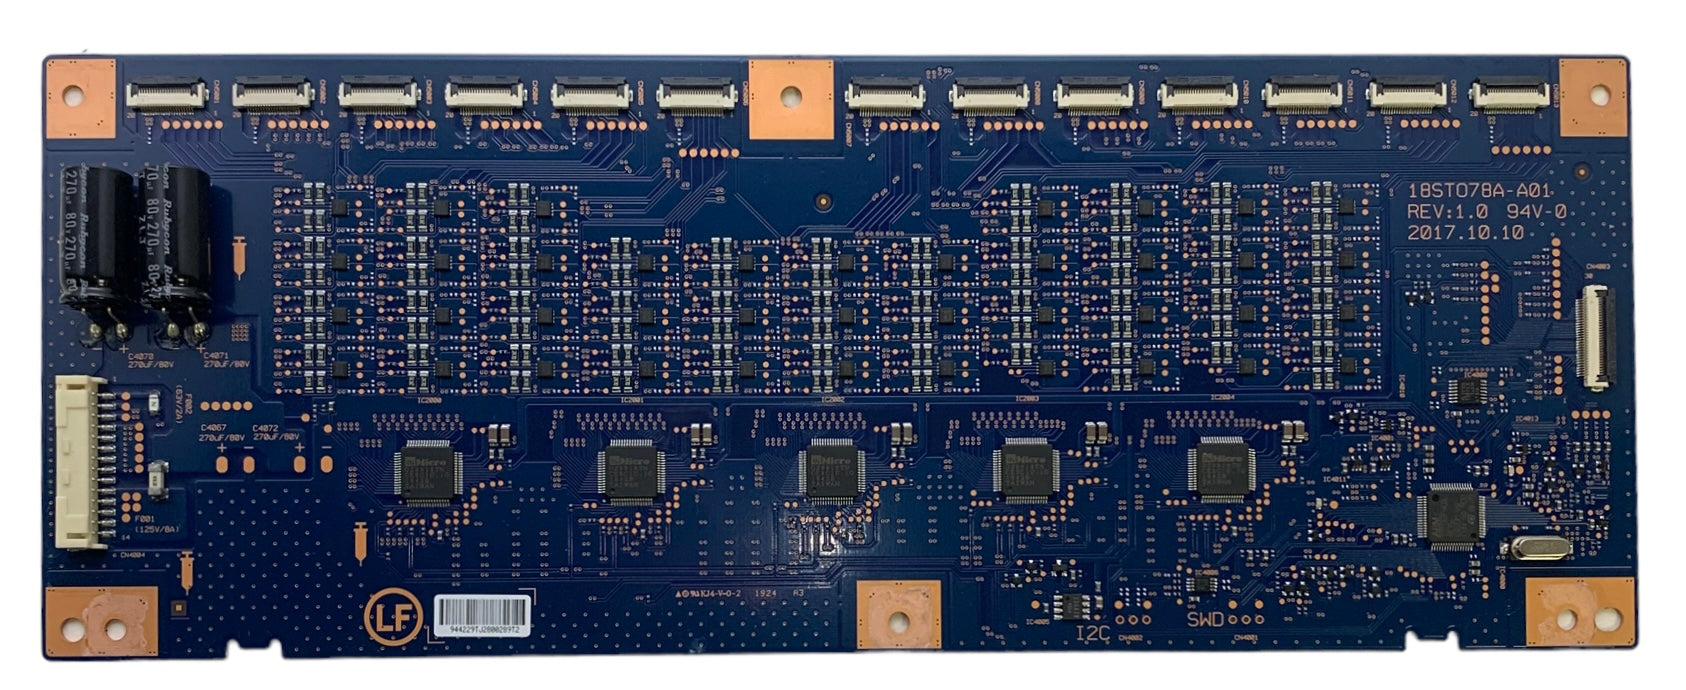 Sony 1-897-326-11 (Converter Mt Board) LED Driver Board